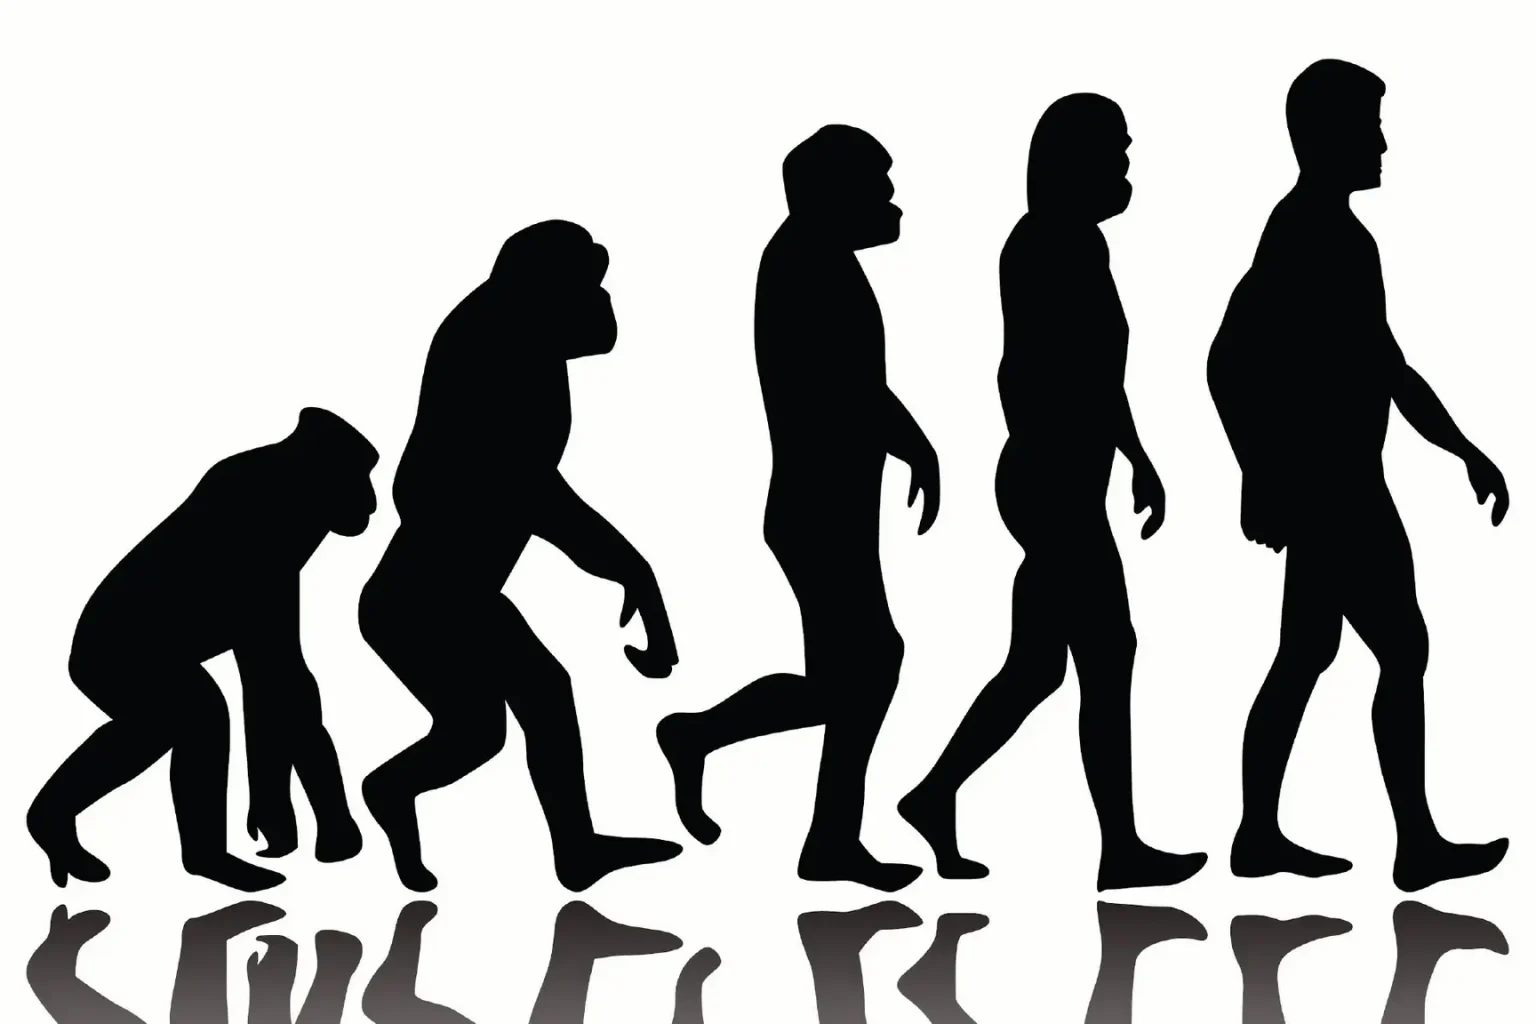 Evolution image